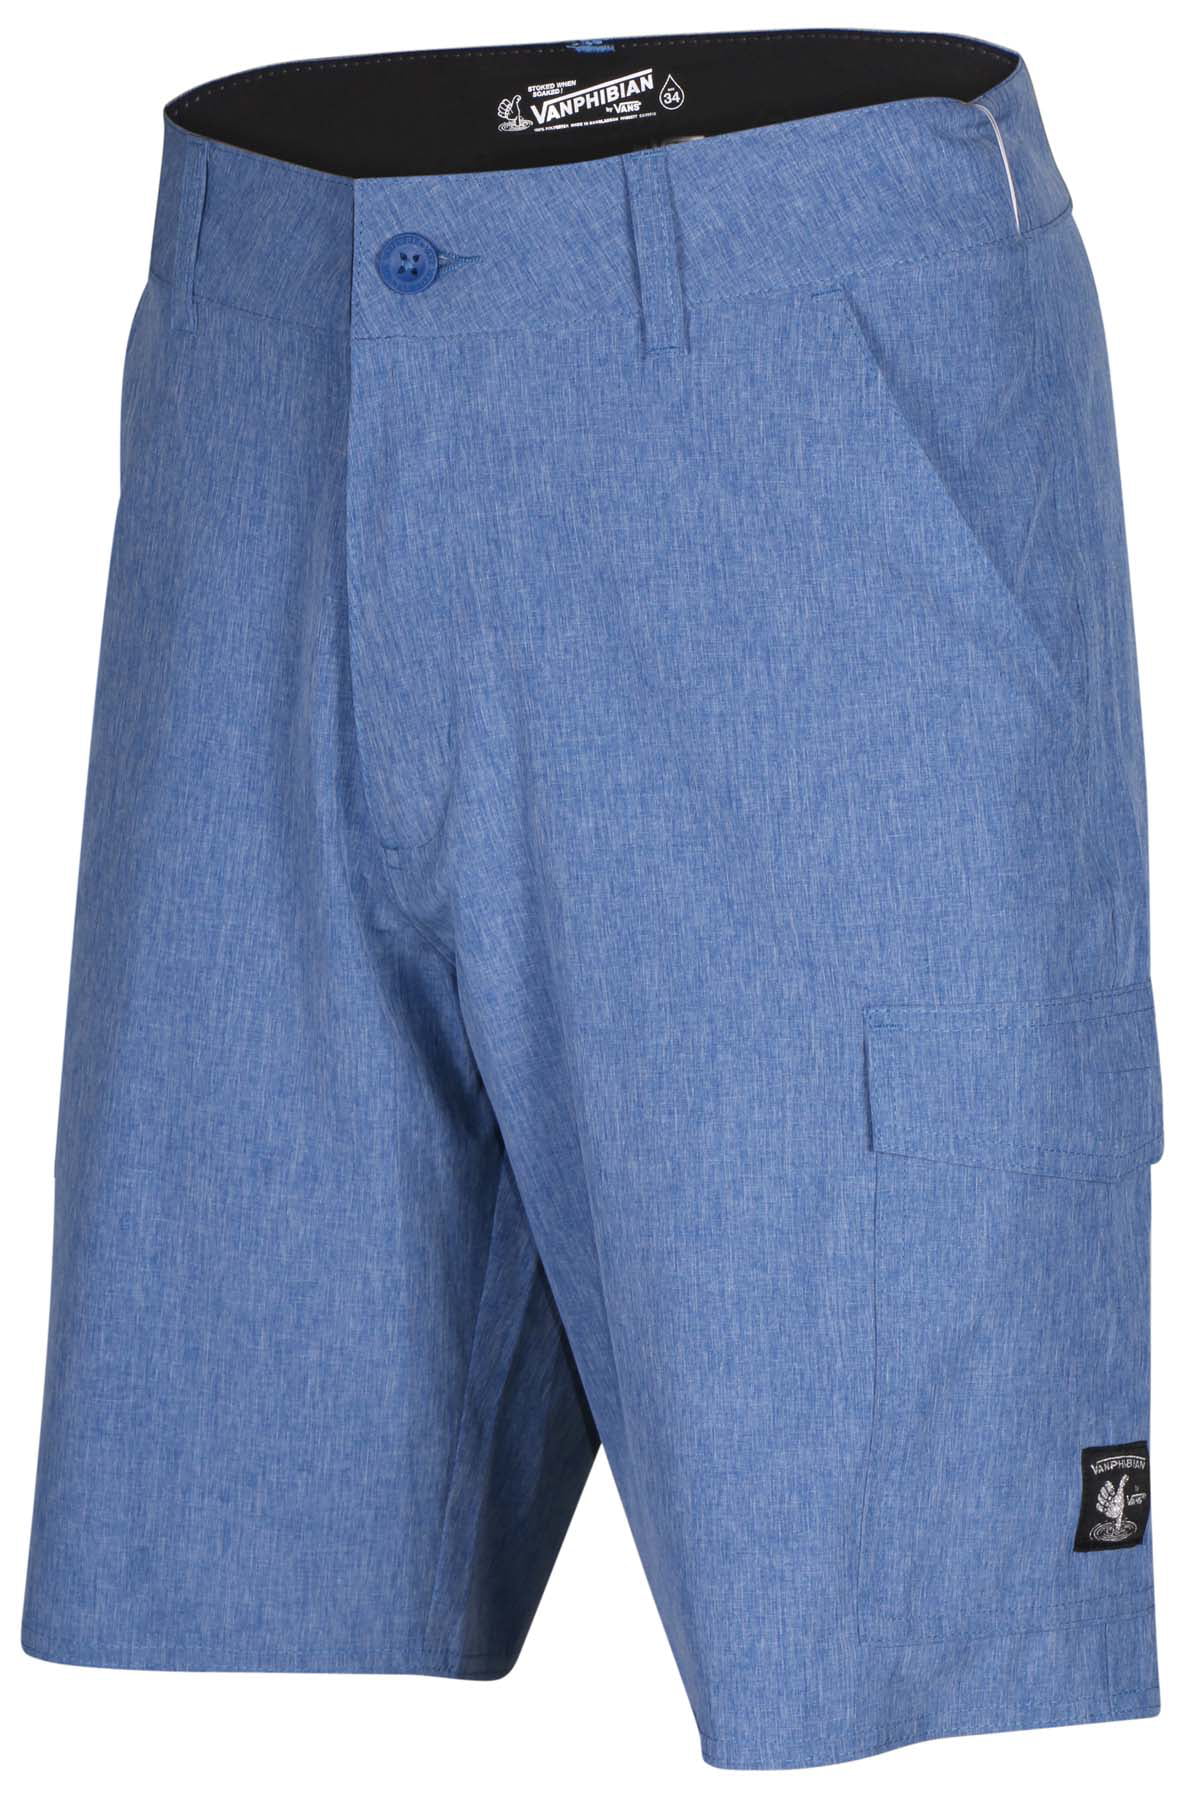 vanphibian shorts 36 cheap online